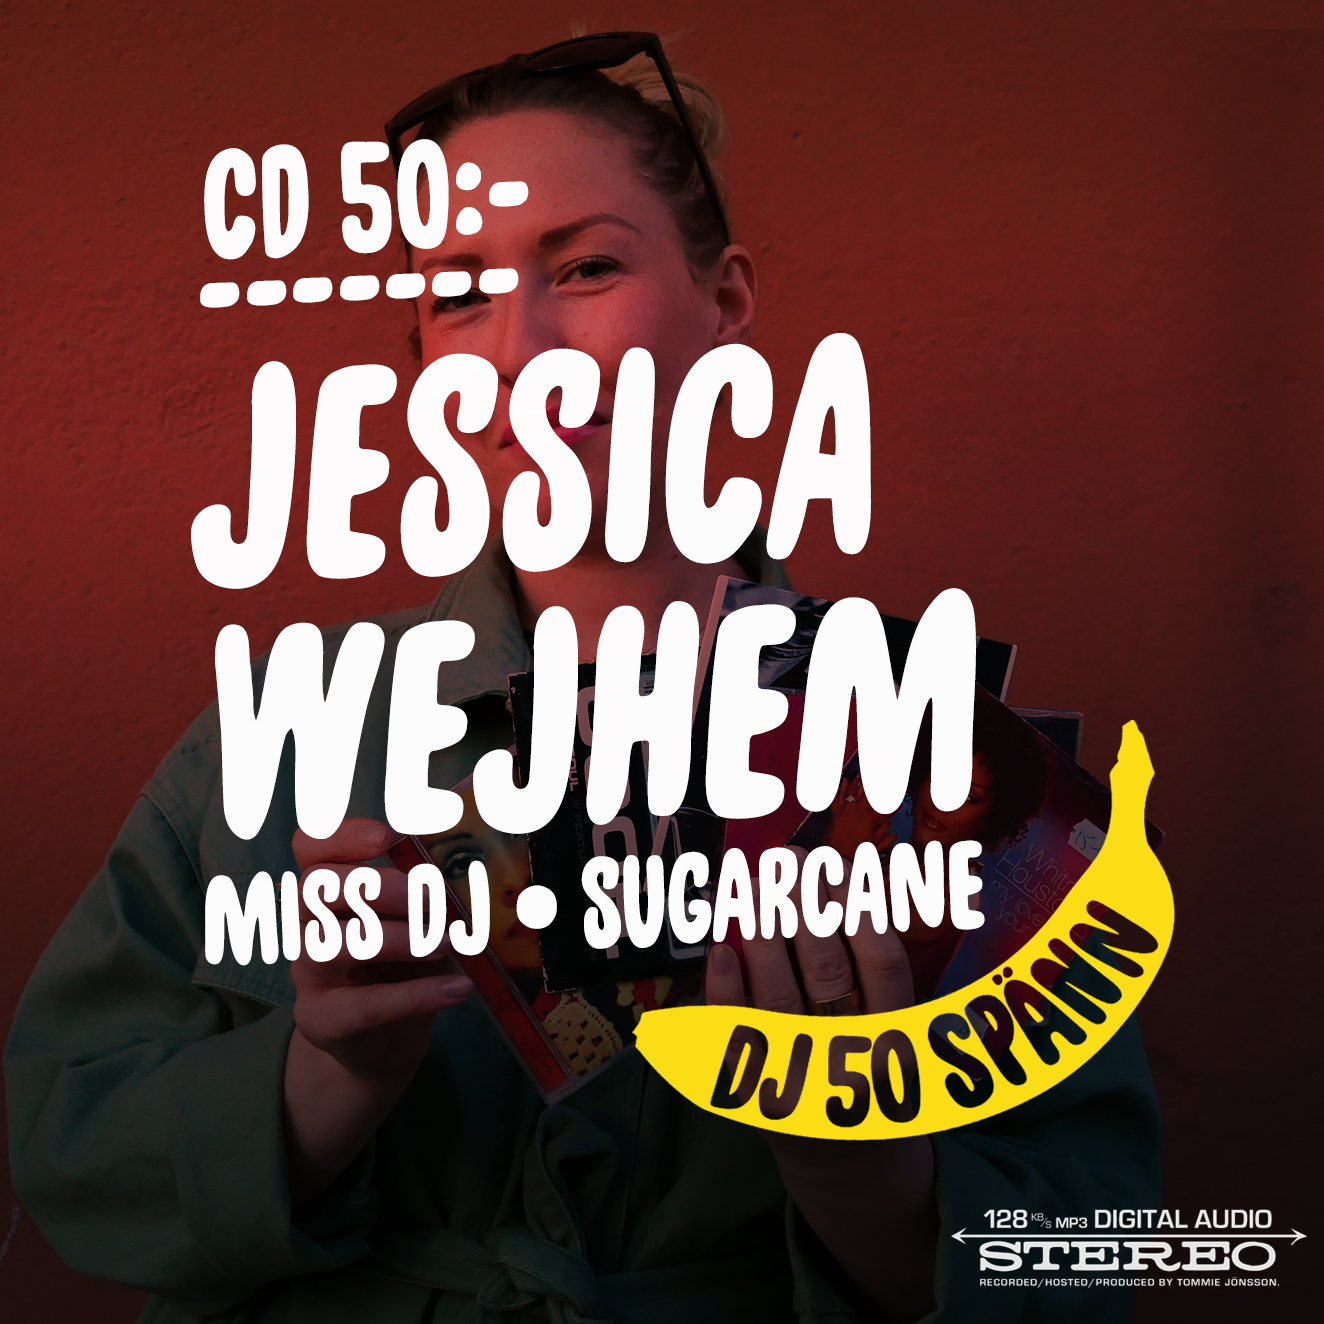 #114: Jessica Wejhem [MissDJ] gräver CD